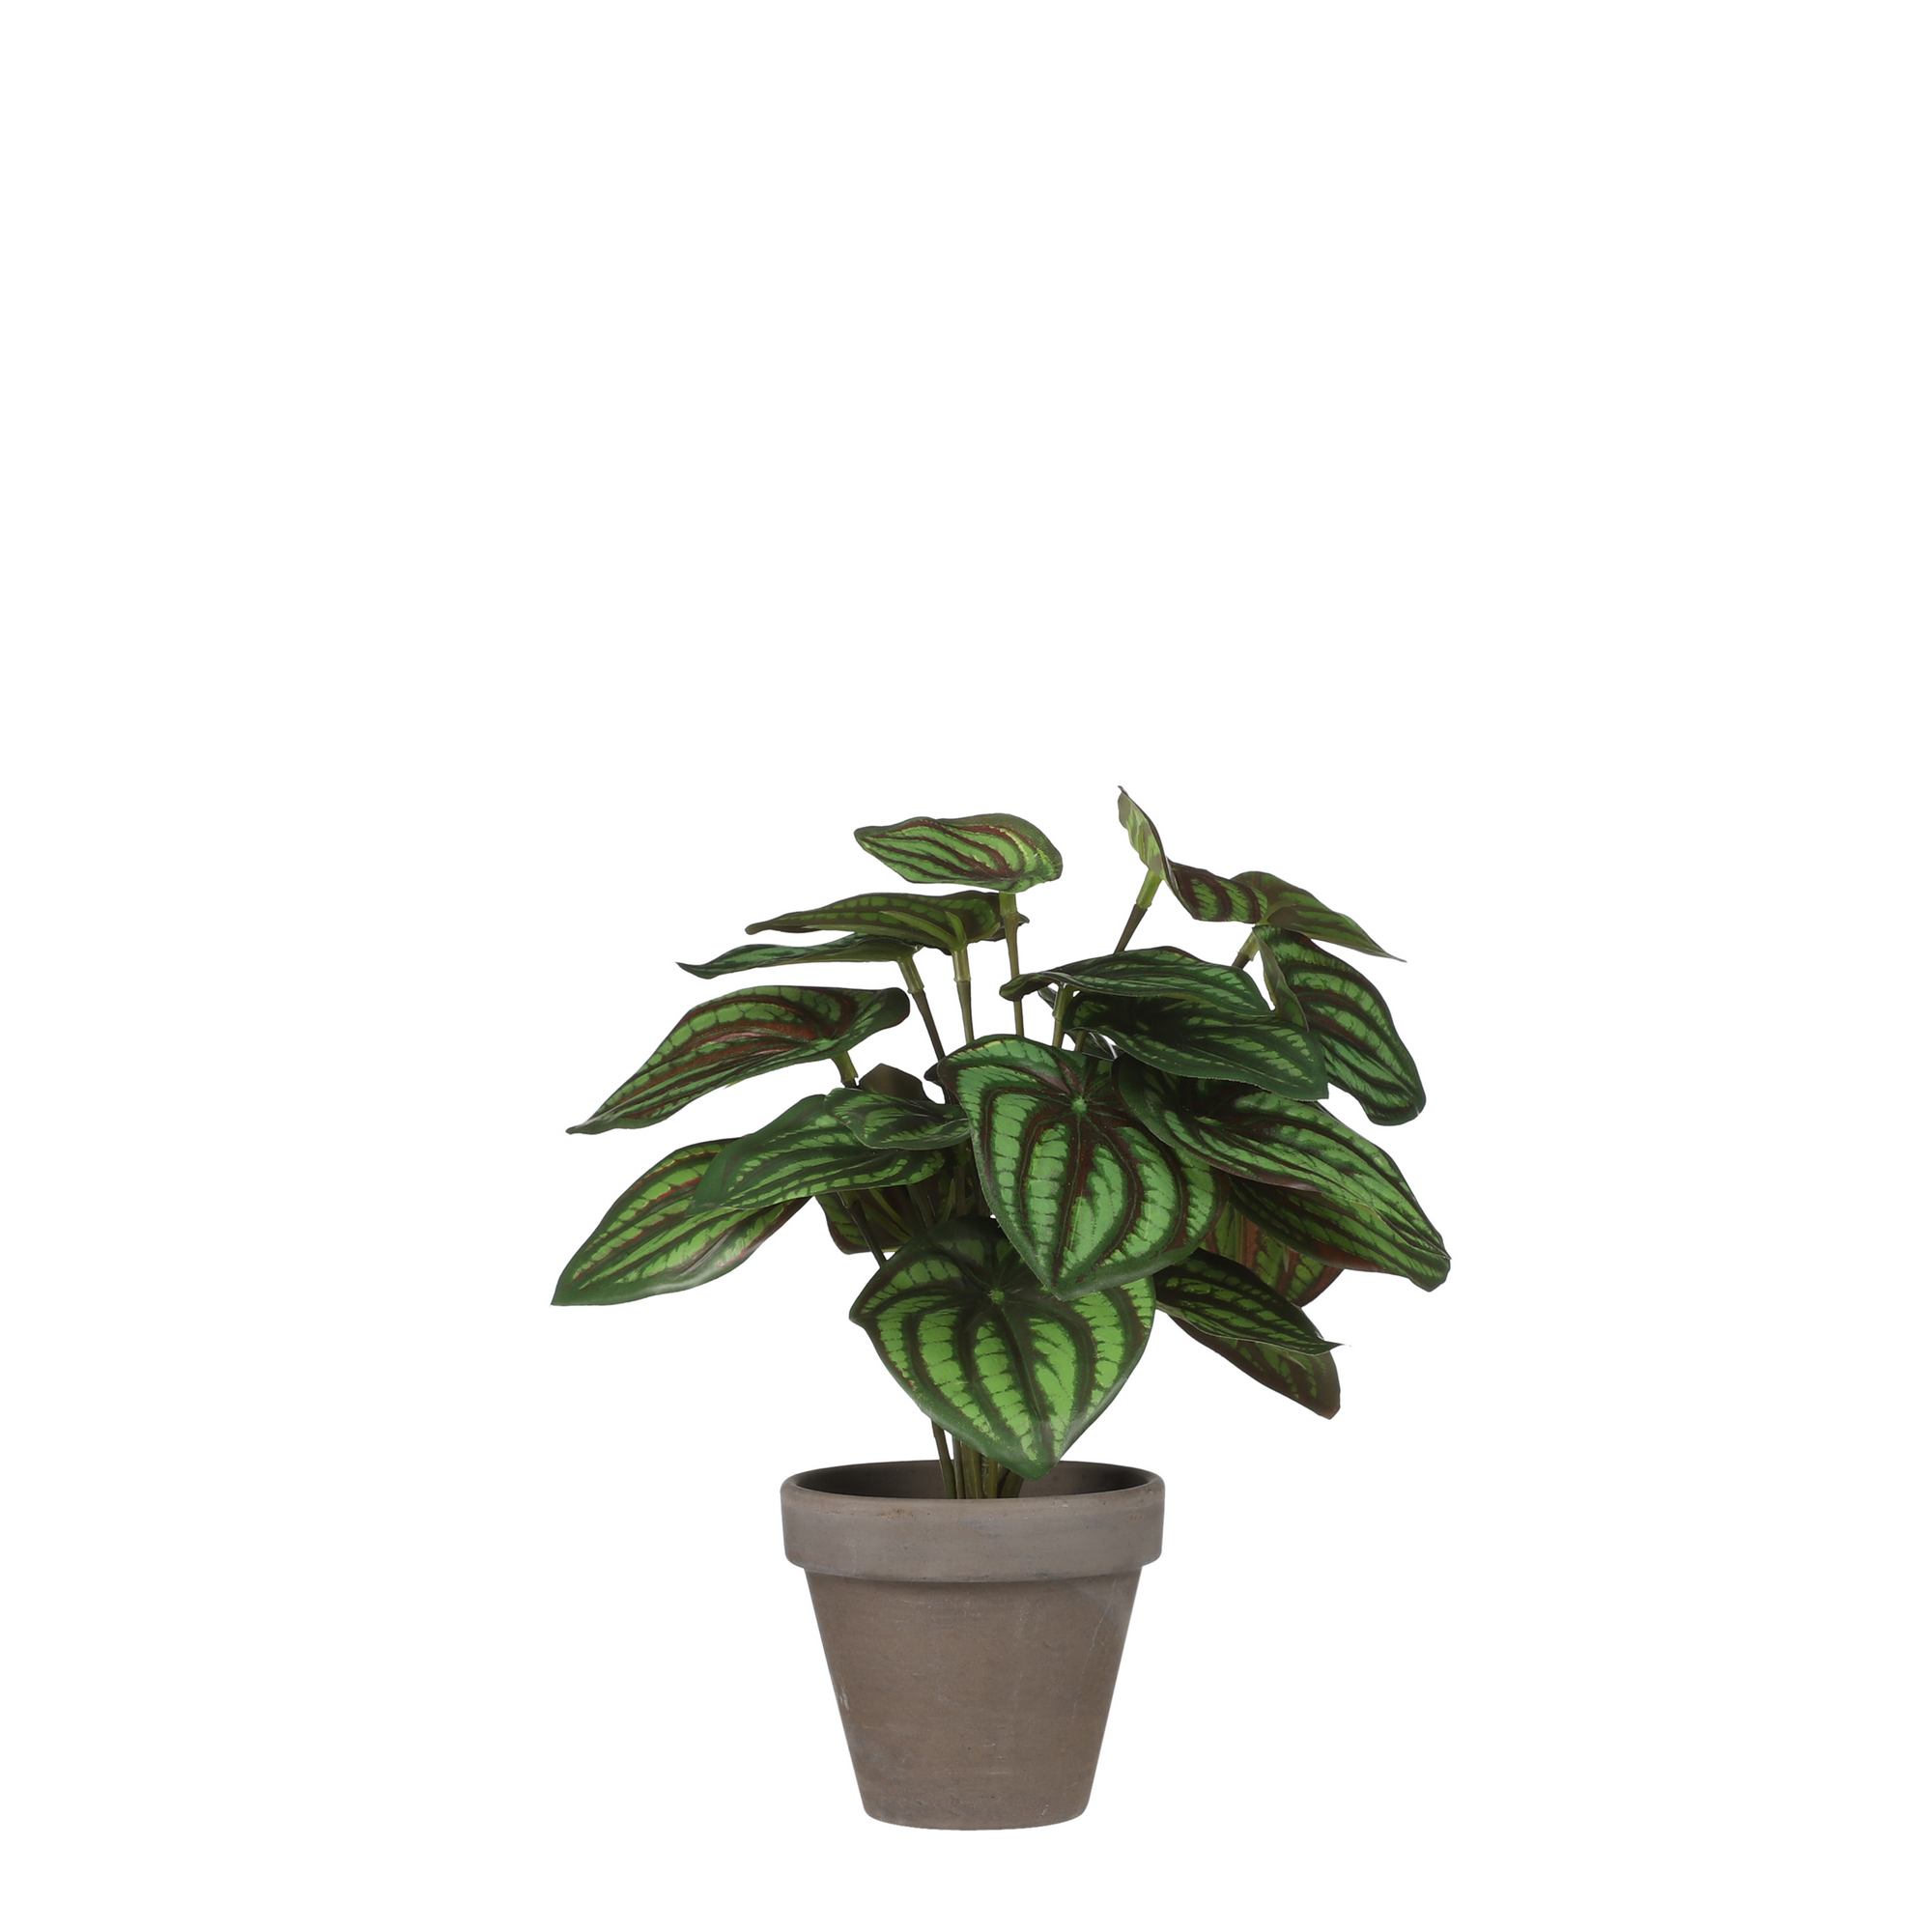 Kunstpflanze Peperomia grün/grau im Topf 9 x 24 x 23 cm + product picture